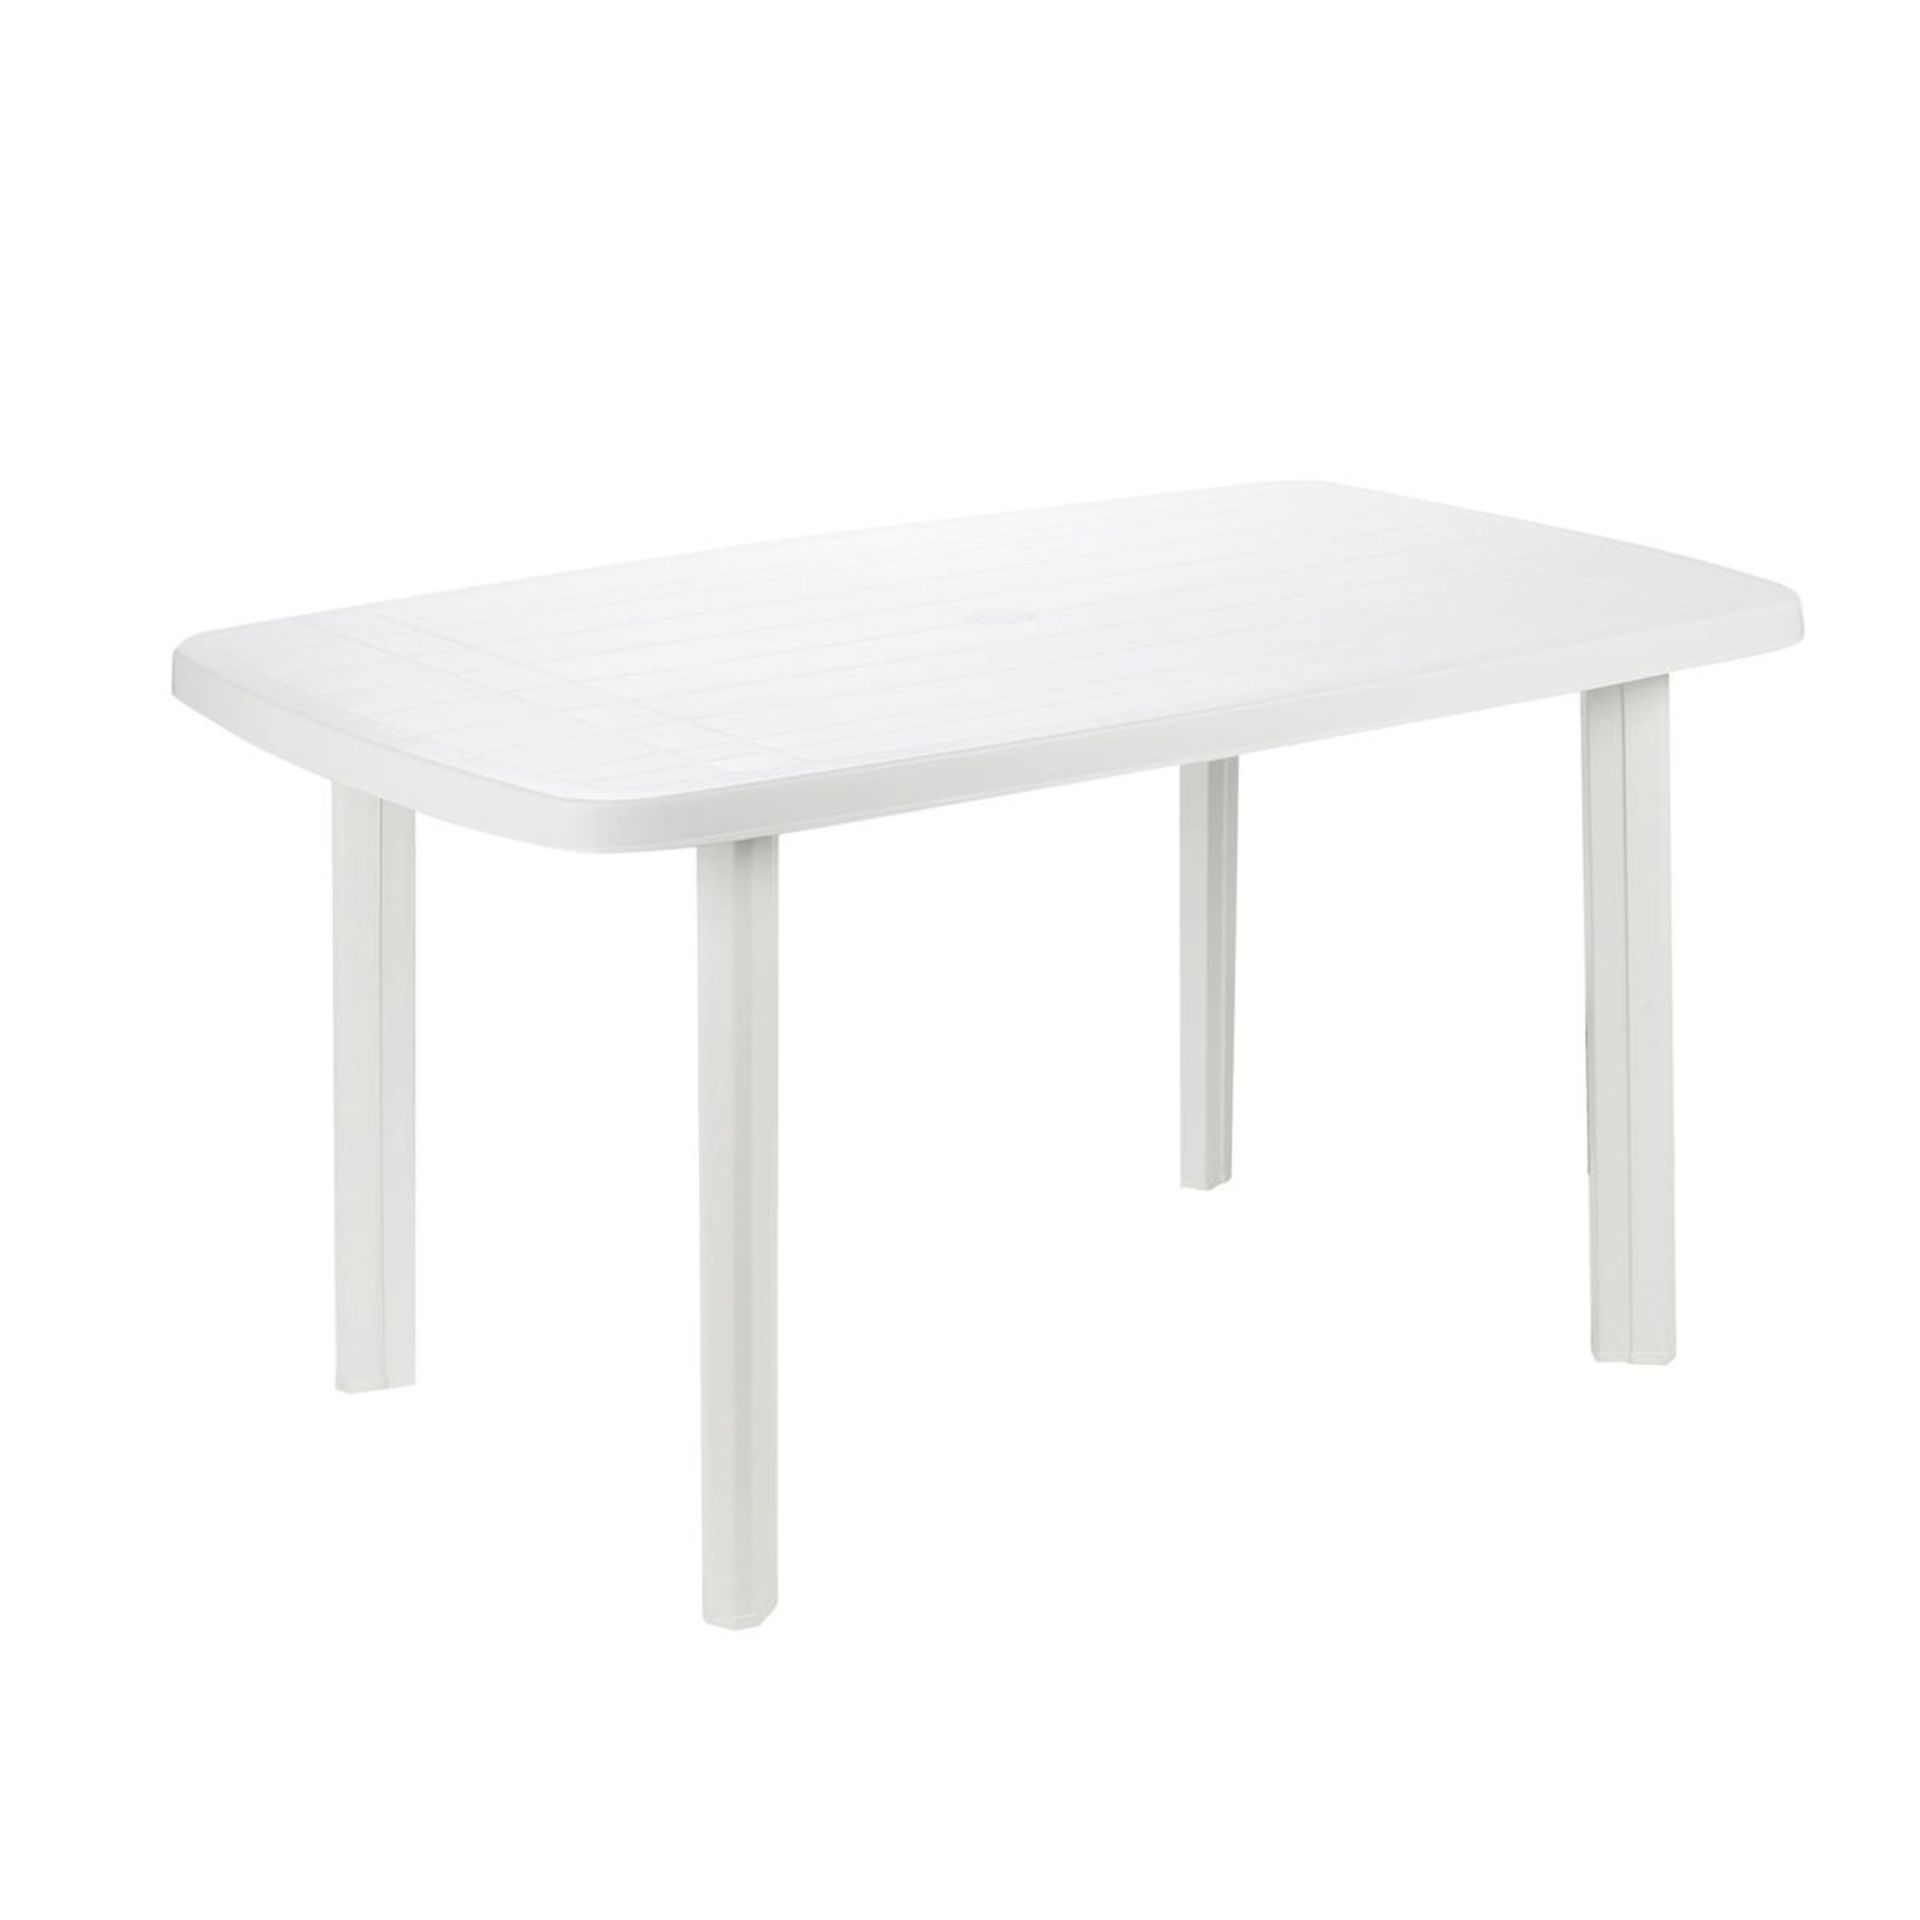 Fun Star 506020 Plastic Table 90 x 140 cm White